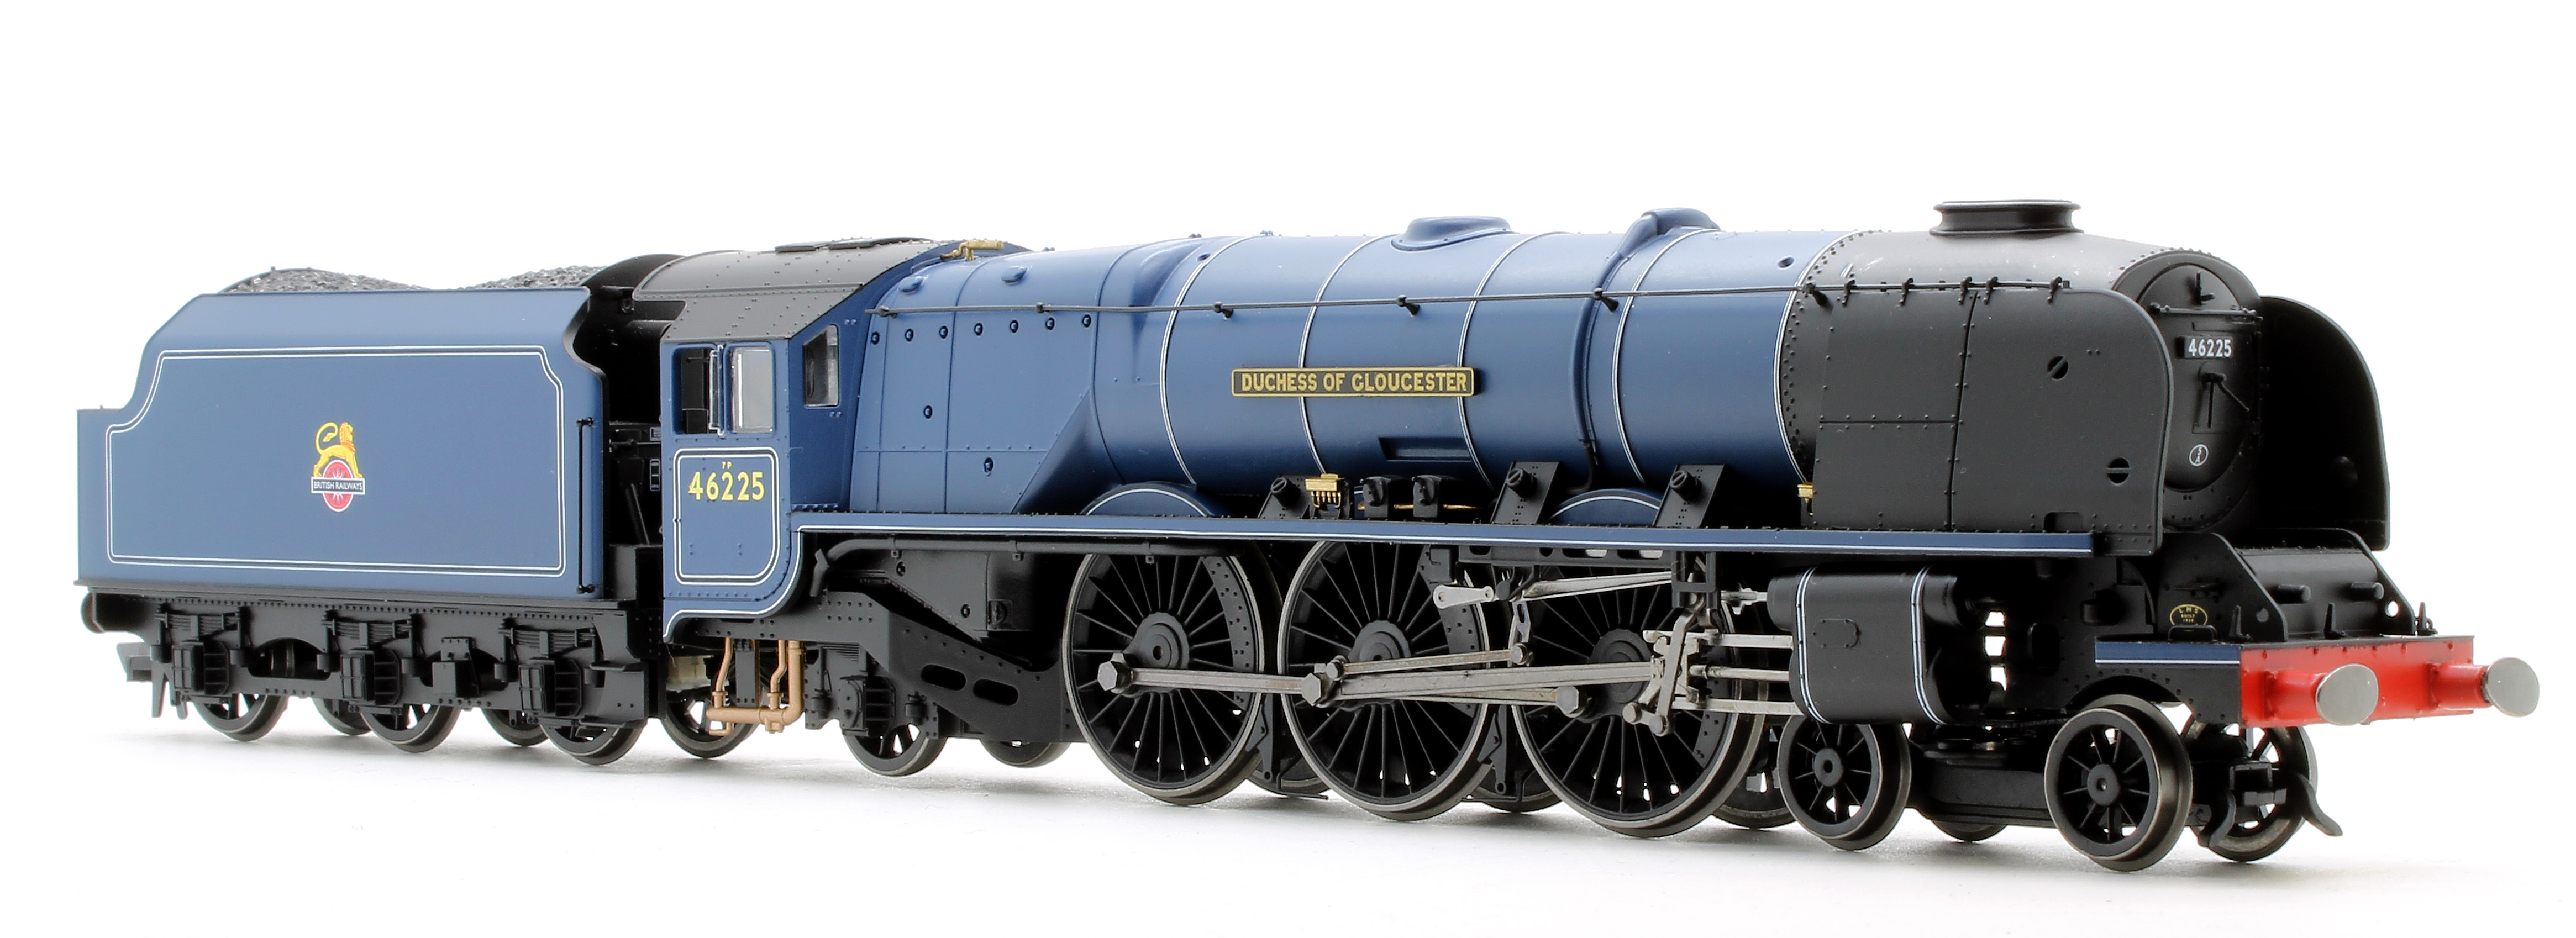 oo gauge steam locomotives